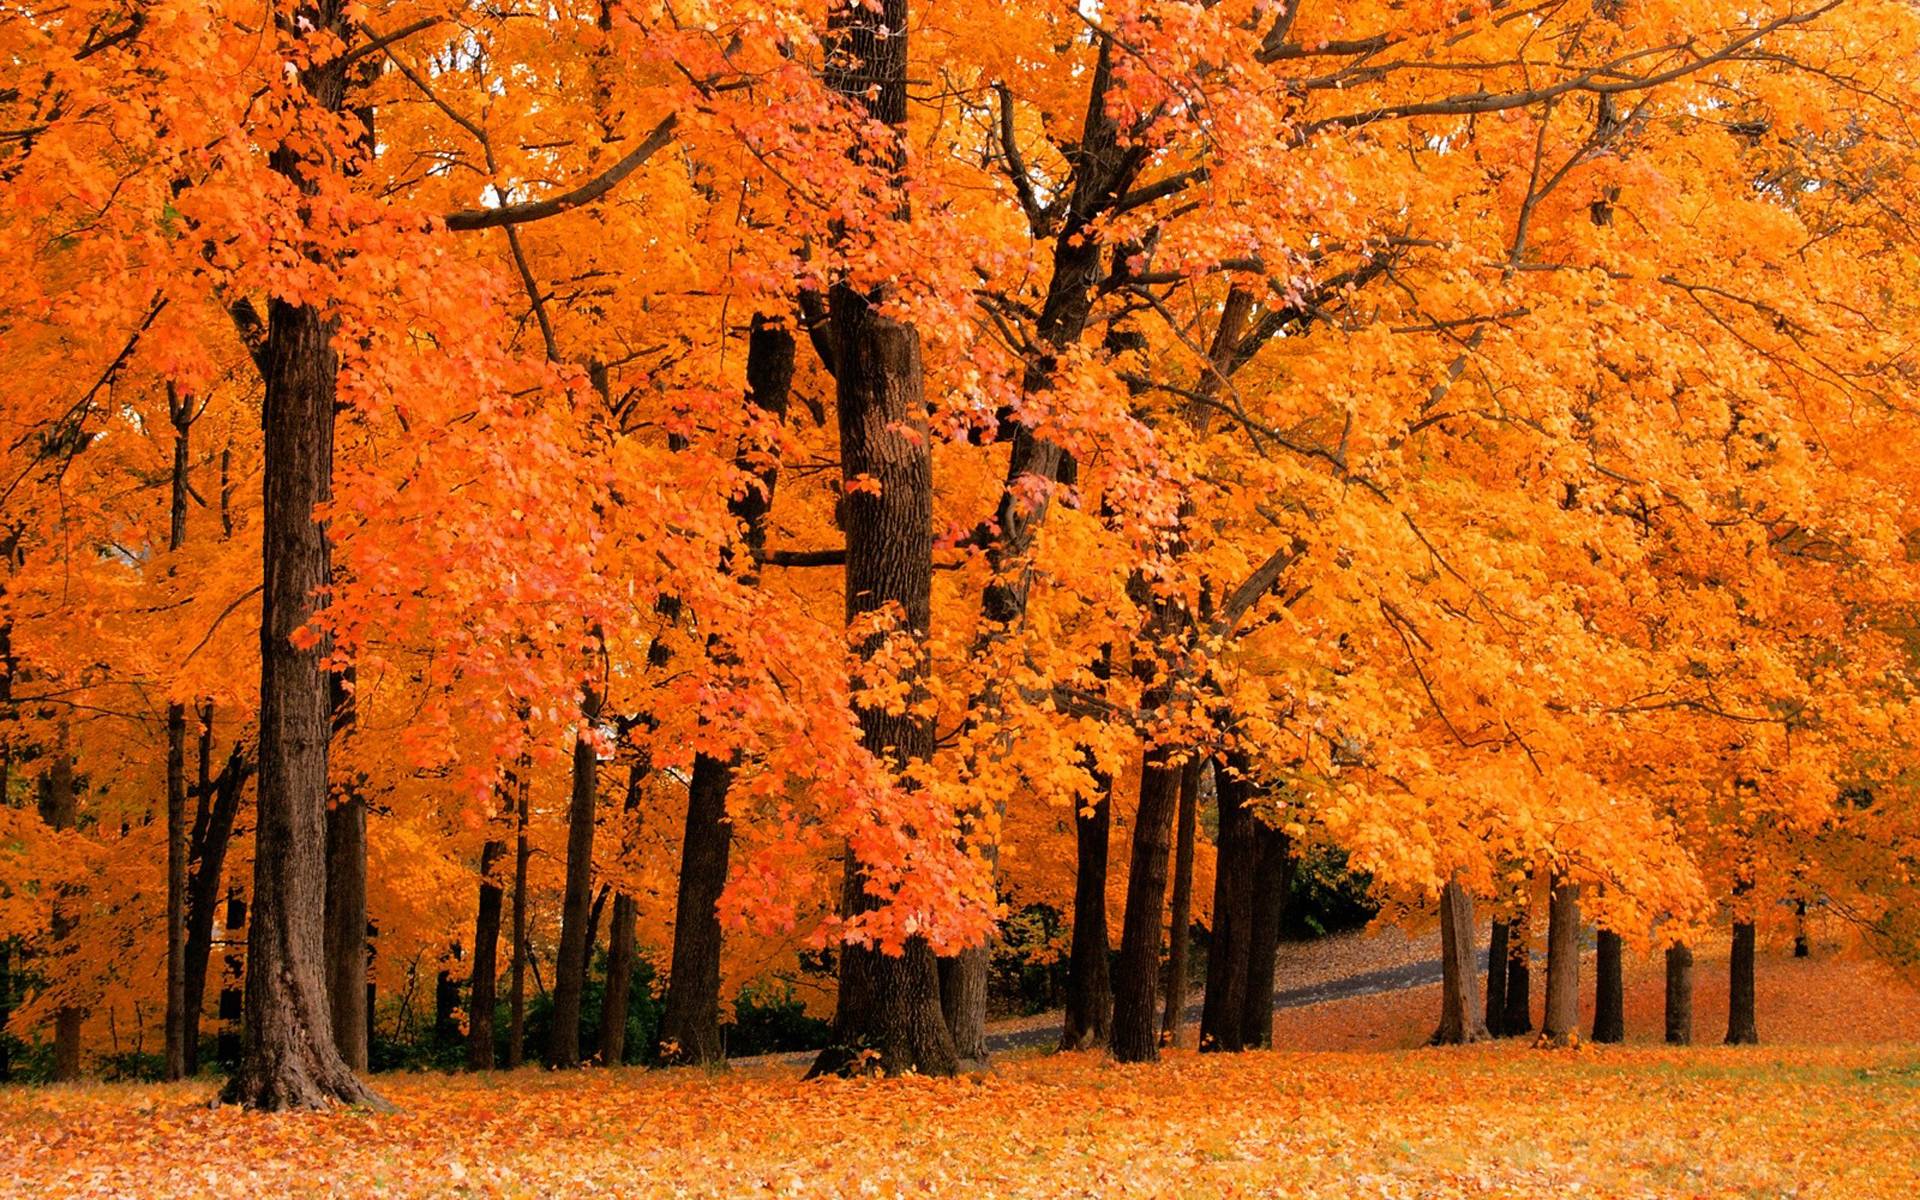 Fall HD Wallpaper. Fall Picture. Autumn Wallpaper. Cool